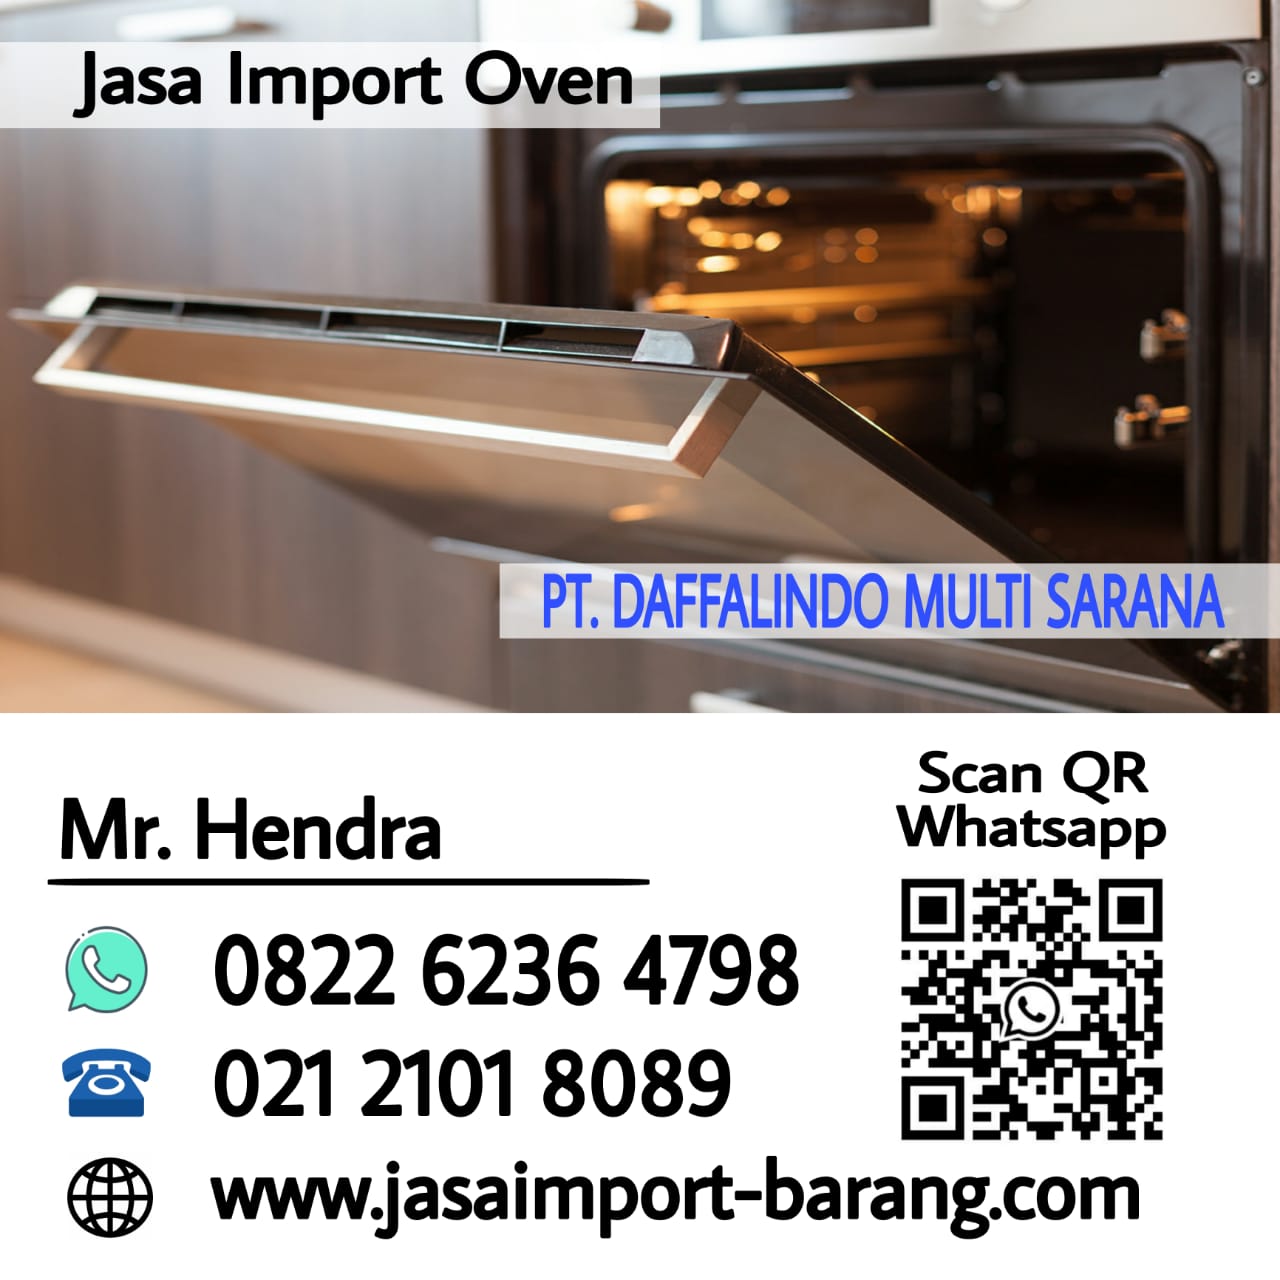 Jasa-Import-Oven.jpg